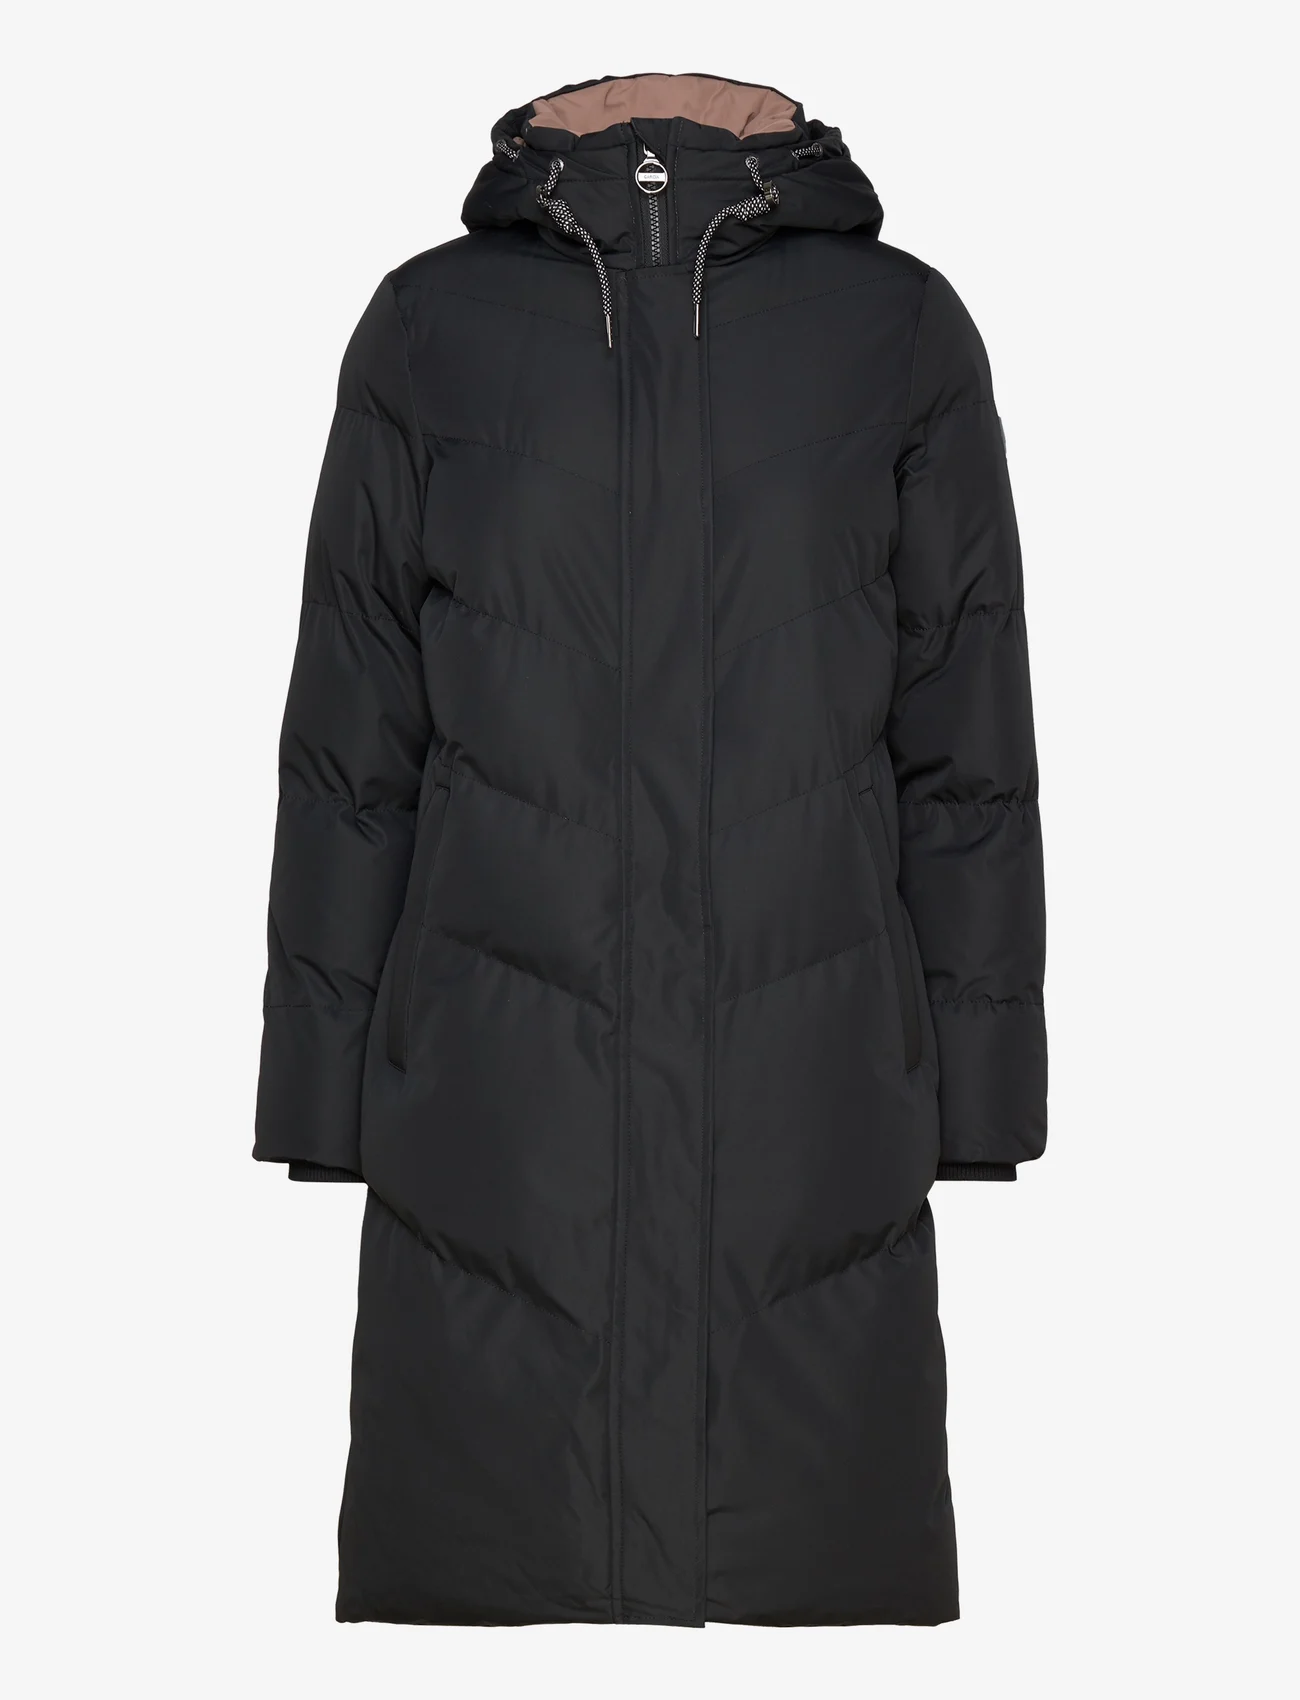 Garcia - ladies outdoor jackets - winter jackets - black - 0